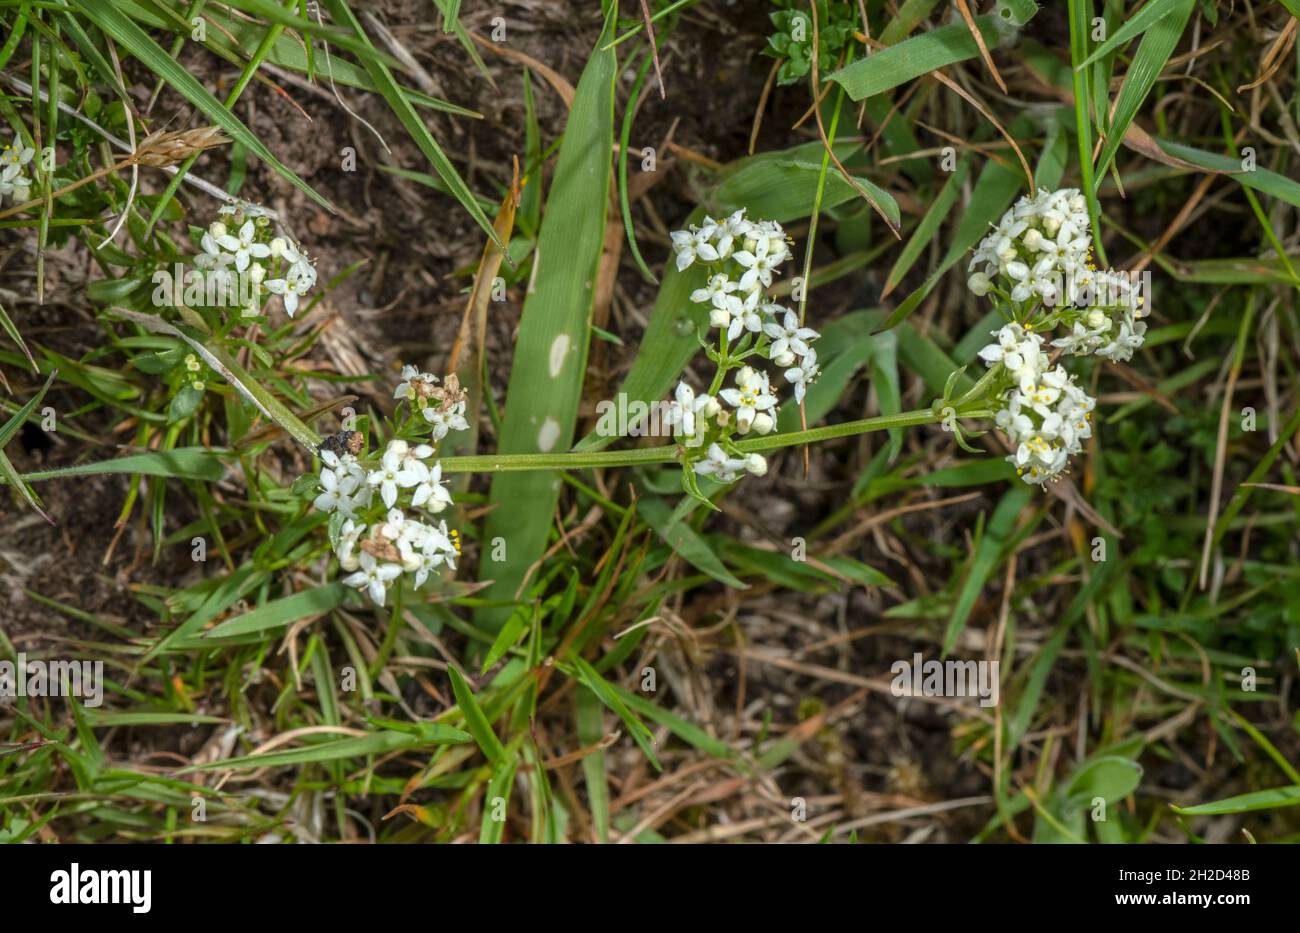 Heath bedstraw, Galium saxatile, in flower in acidic grassland, Exmoor. Stock Photo